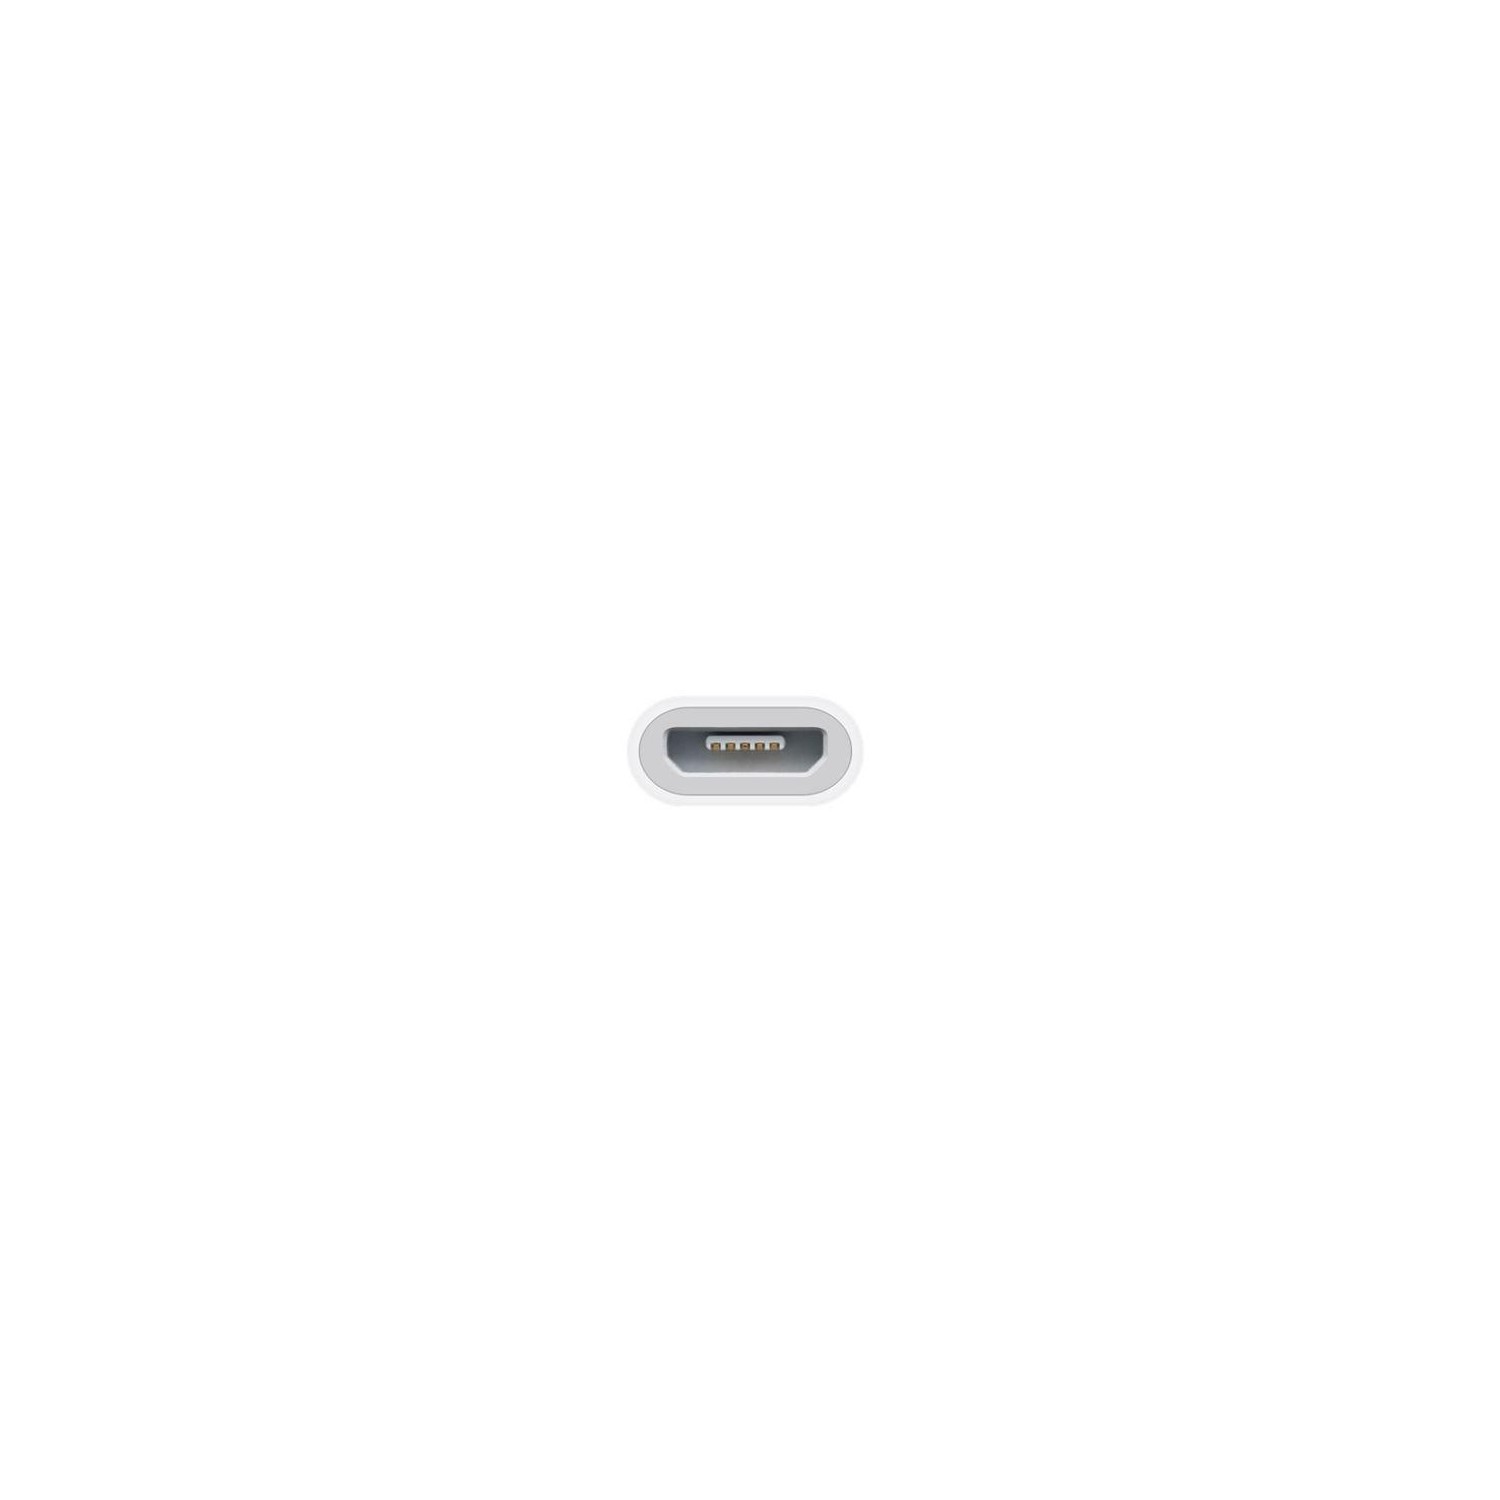 Cable original de conector Lightning a USB (1 m) MD818ZMA para Iphone5/6/6s nuevo